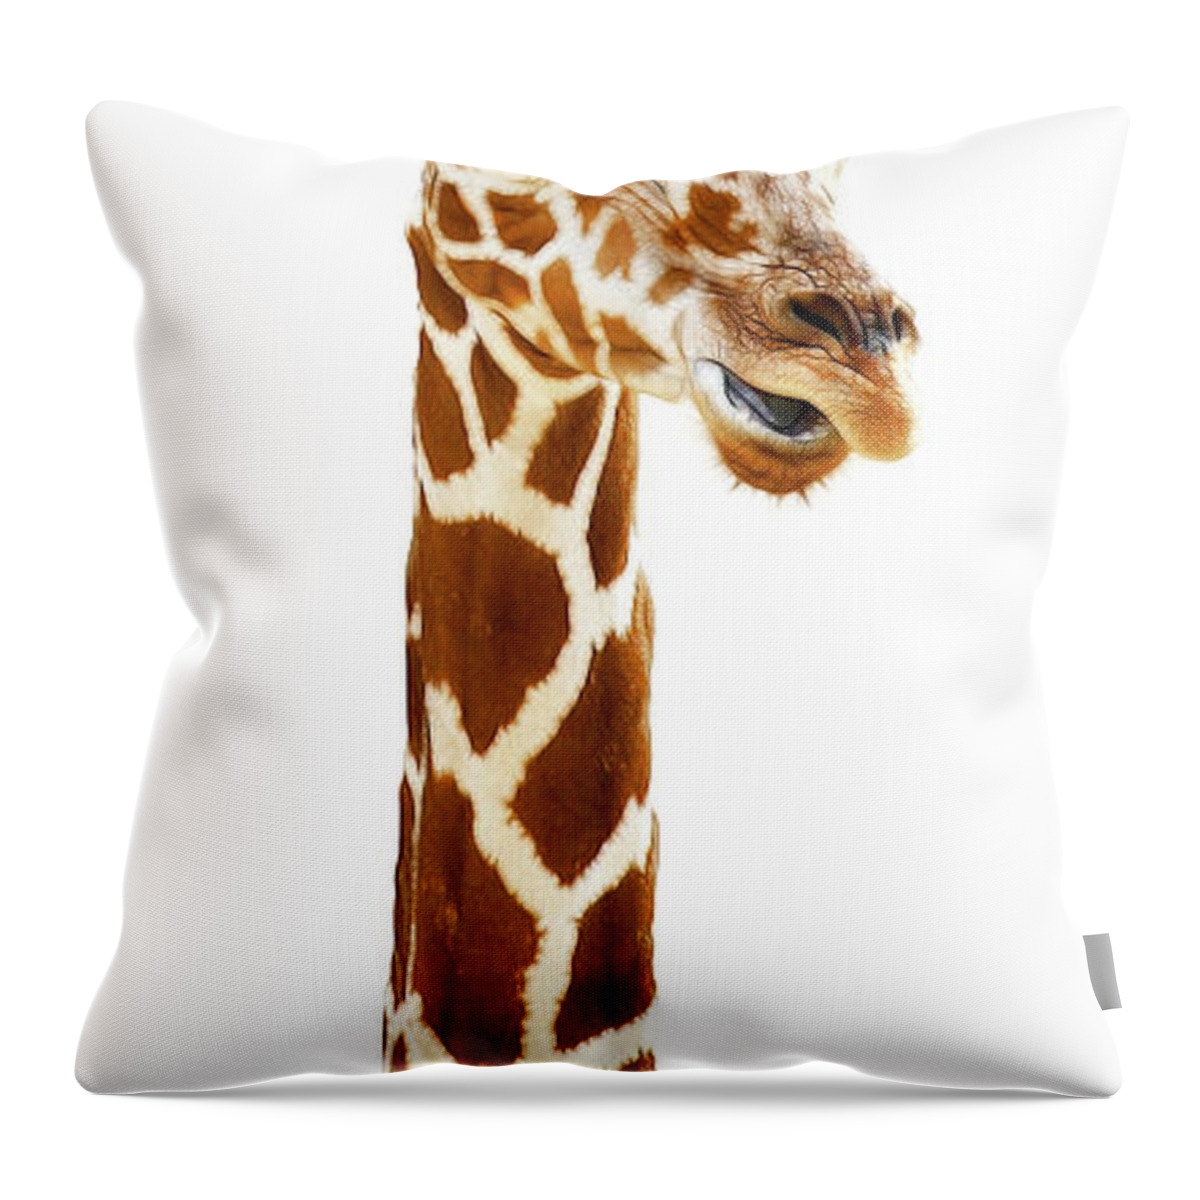 Giraffe Throw Pillow featuring the photograph Funny Giraffe by Athena Mckinzie